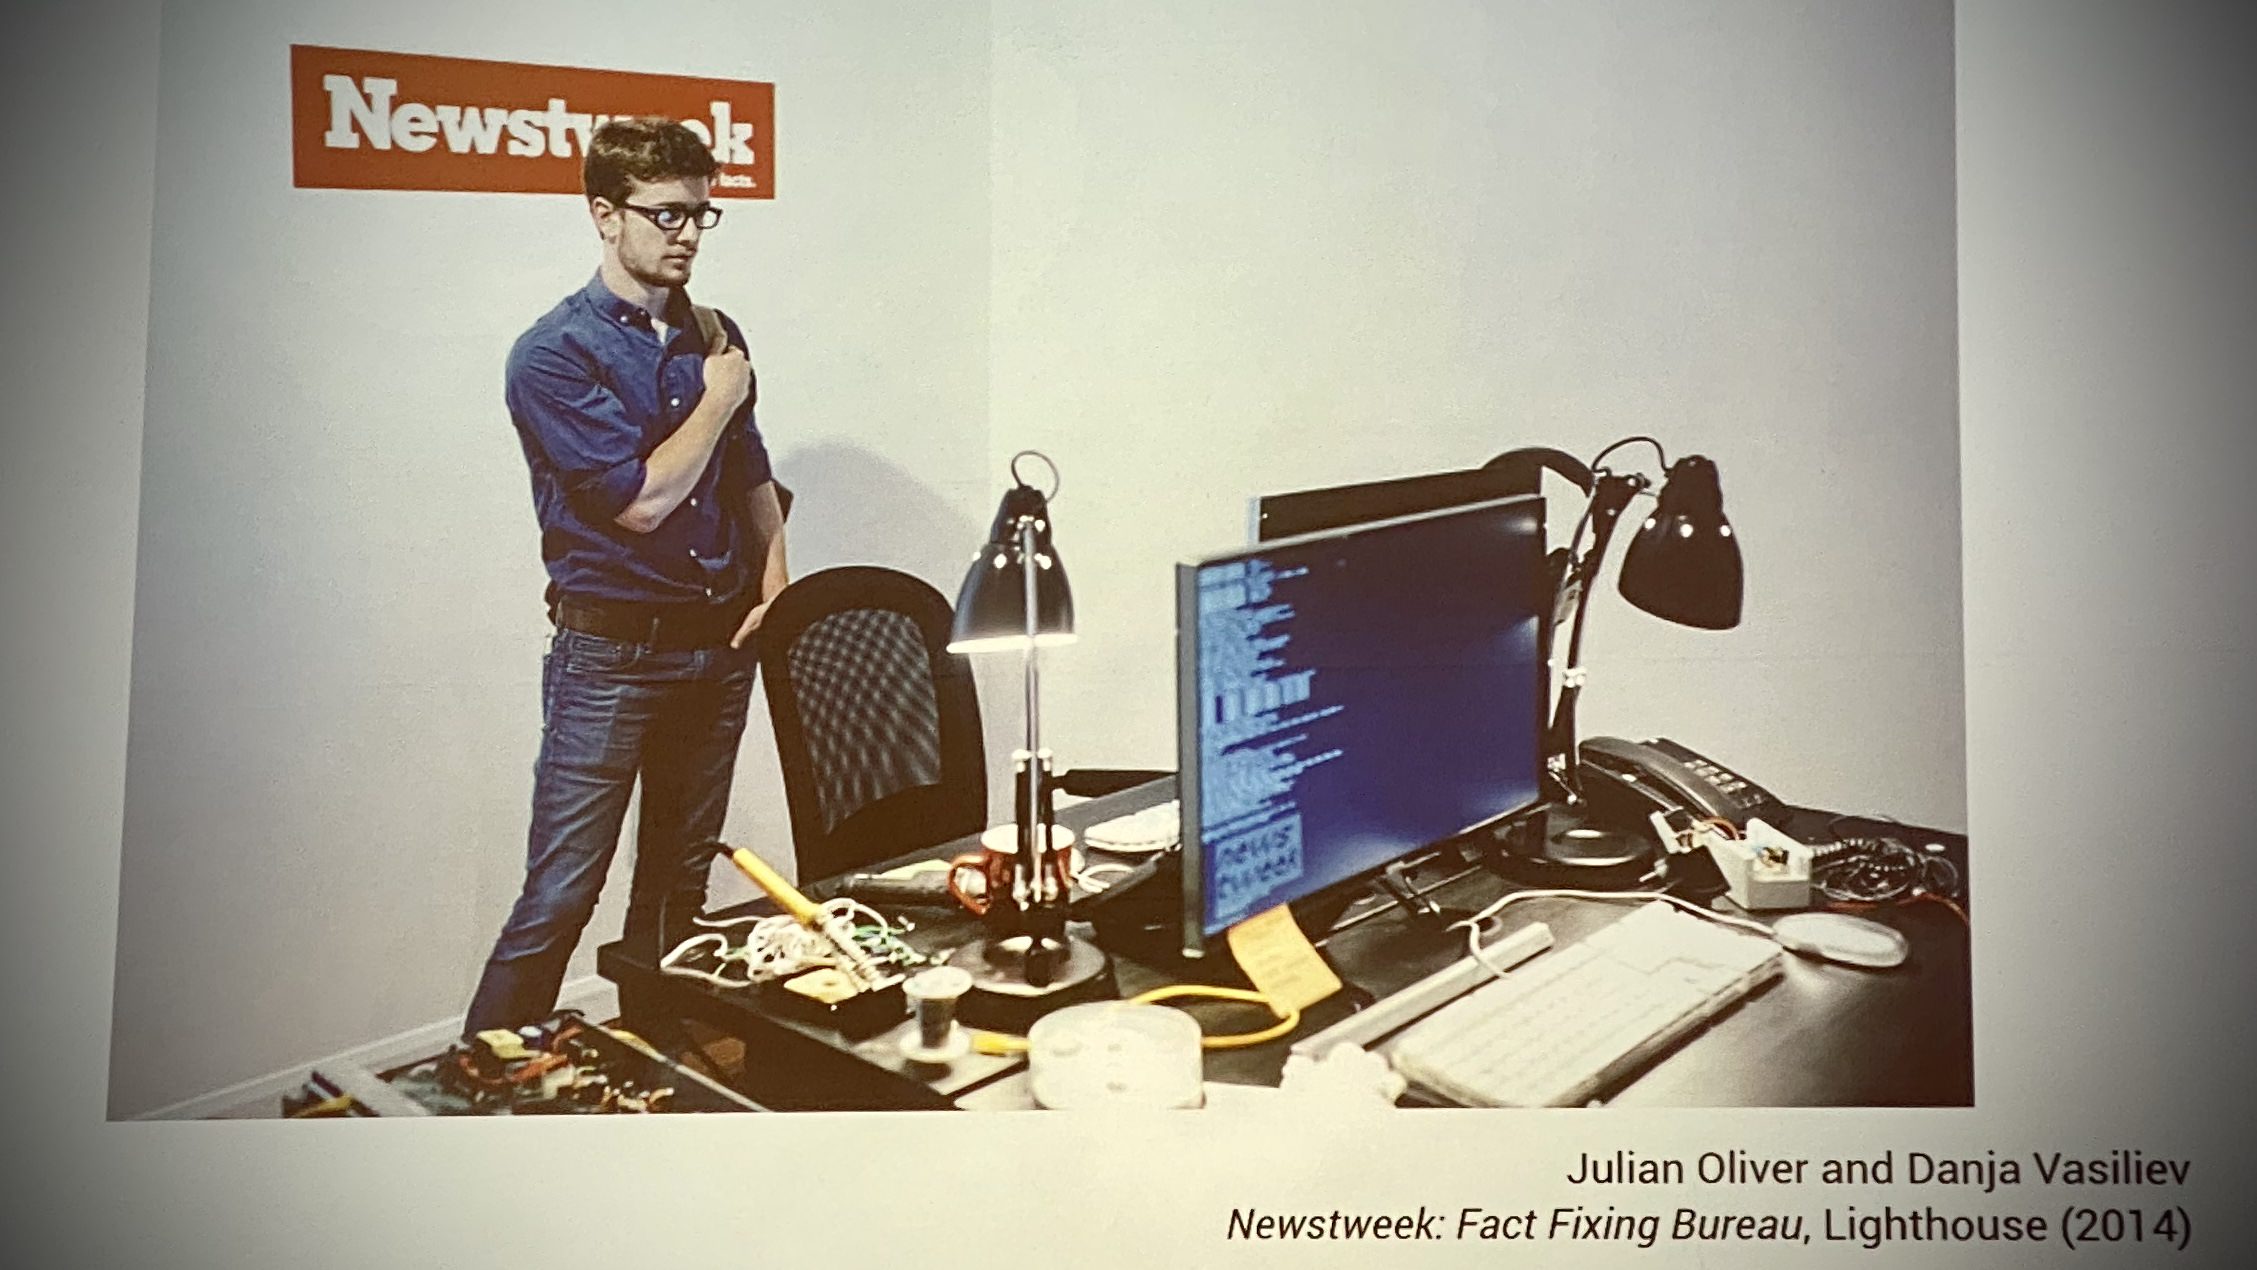 A man behind a desk with Newstweek logo on the wall